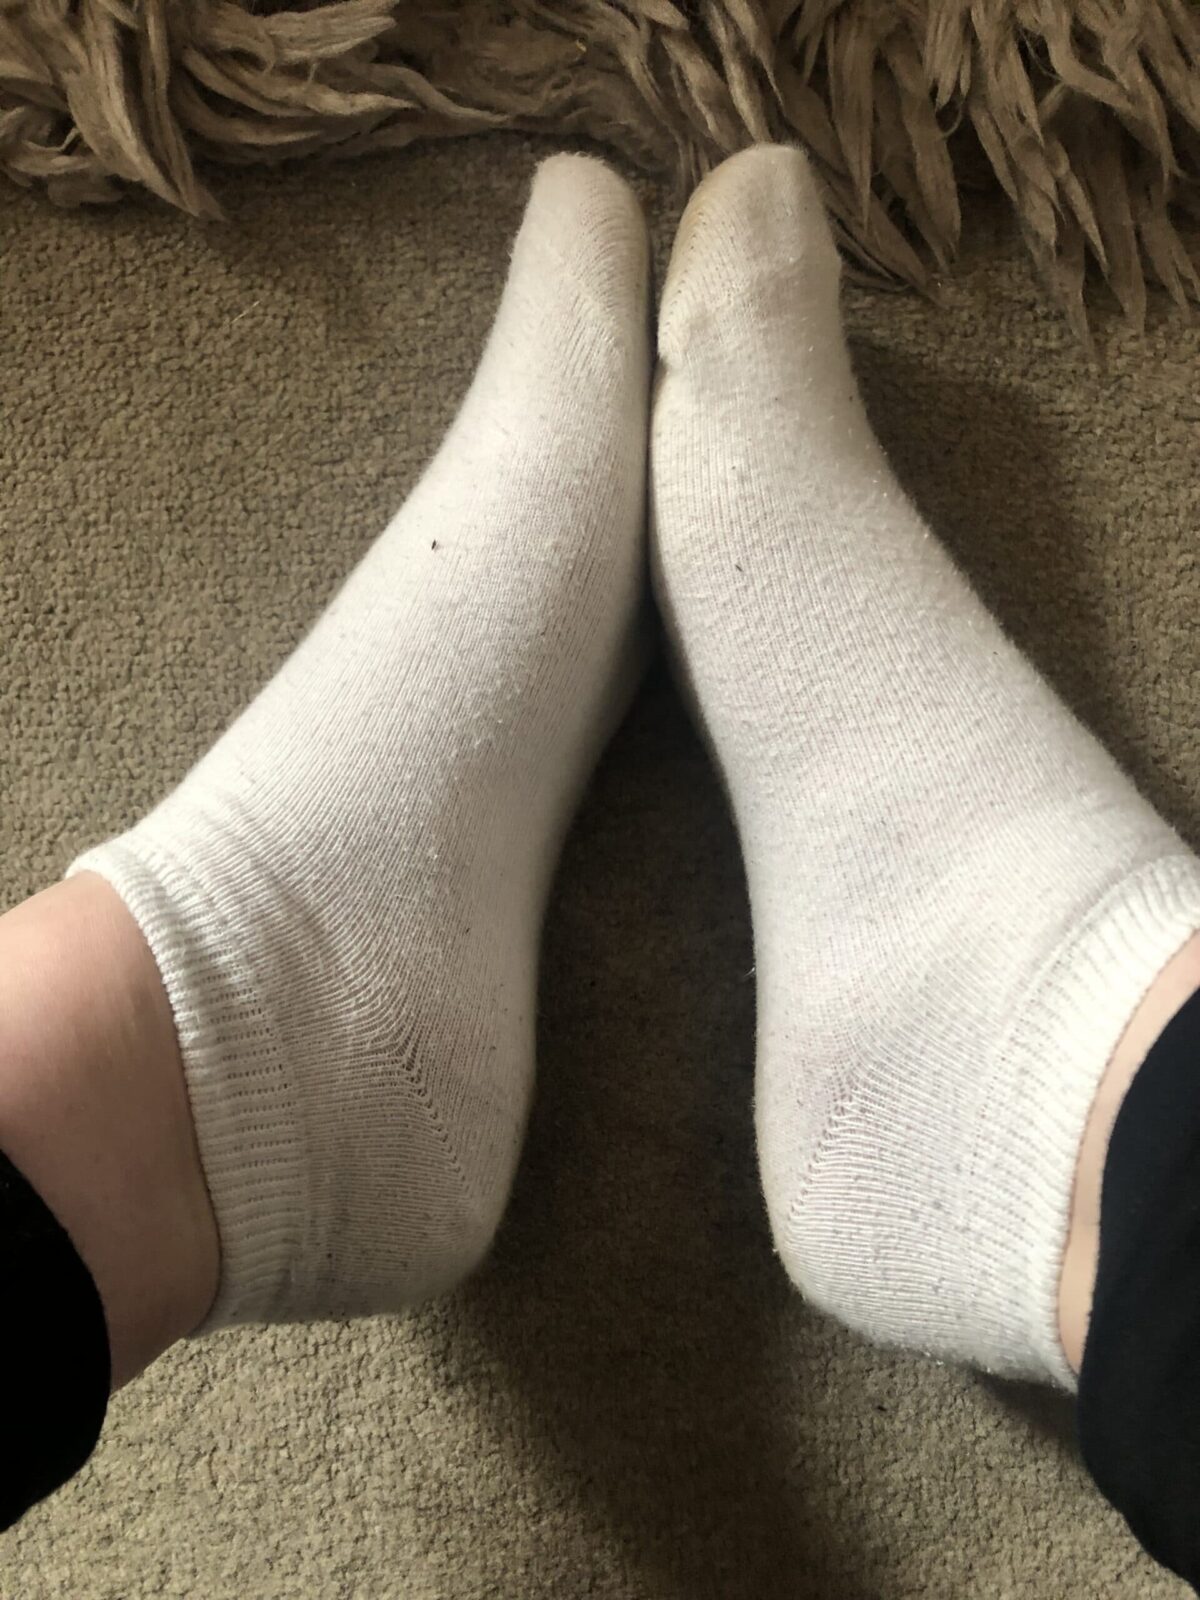 Women’s used white trainer socks - Knickery